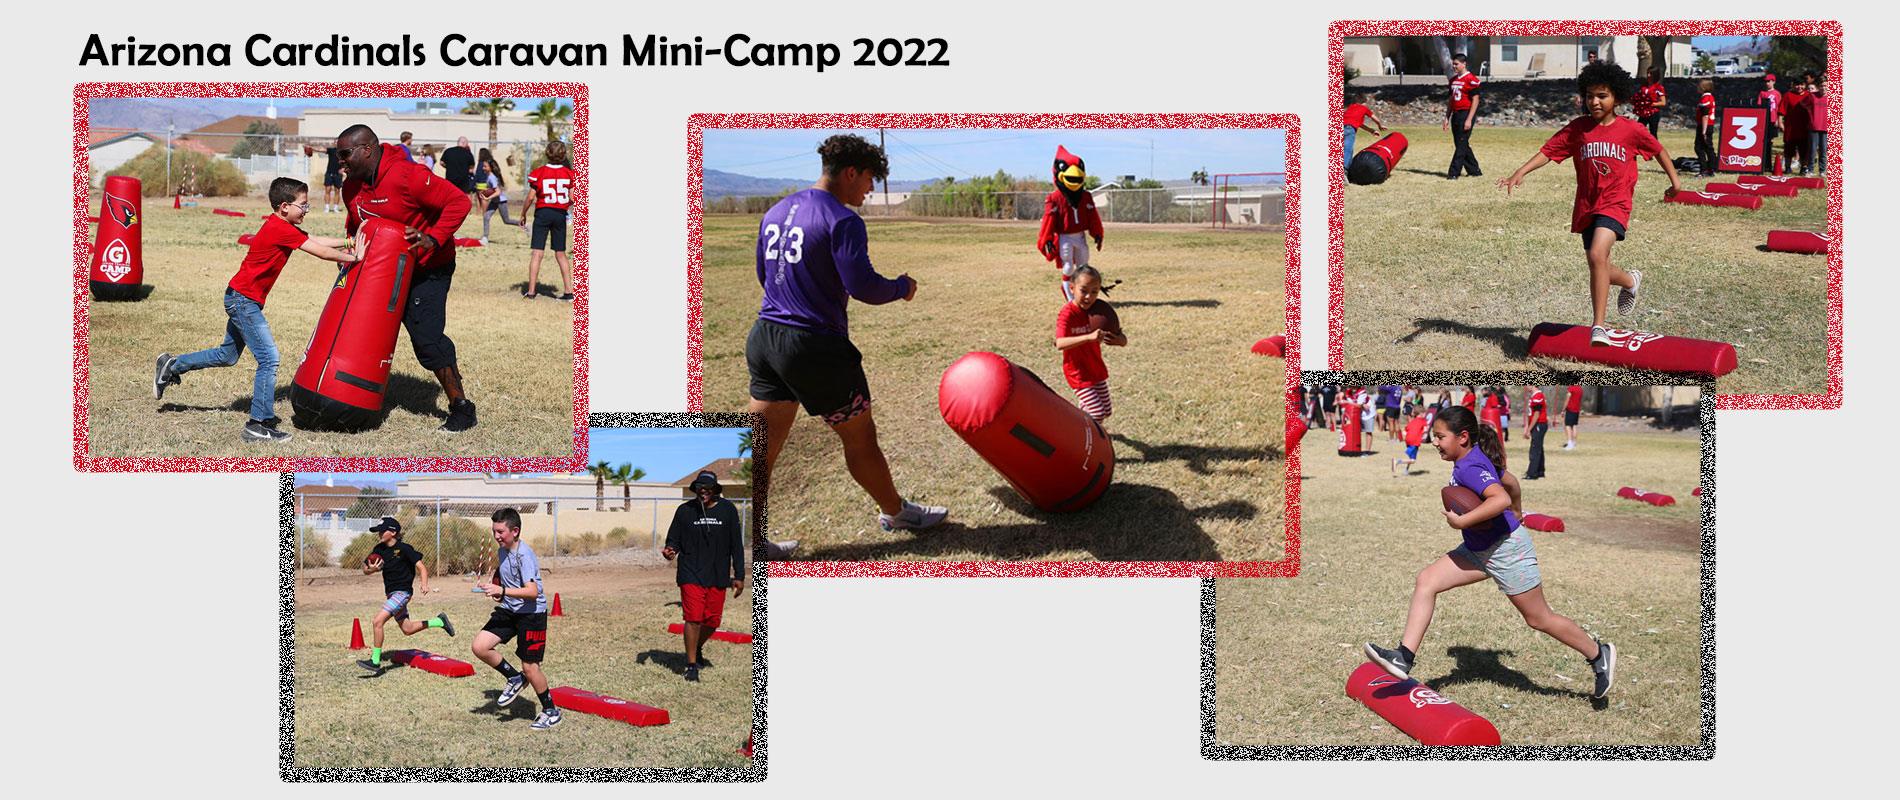 Students participate in Arizona Cardinals Caravan Mini-Camp